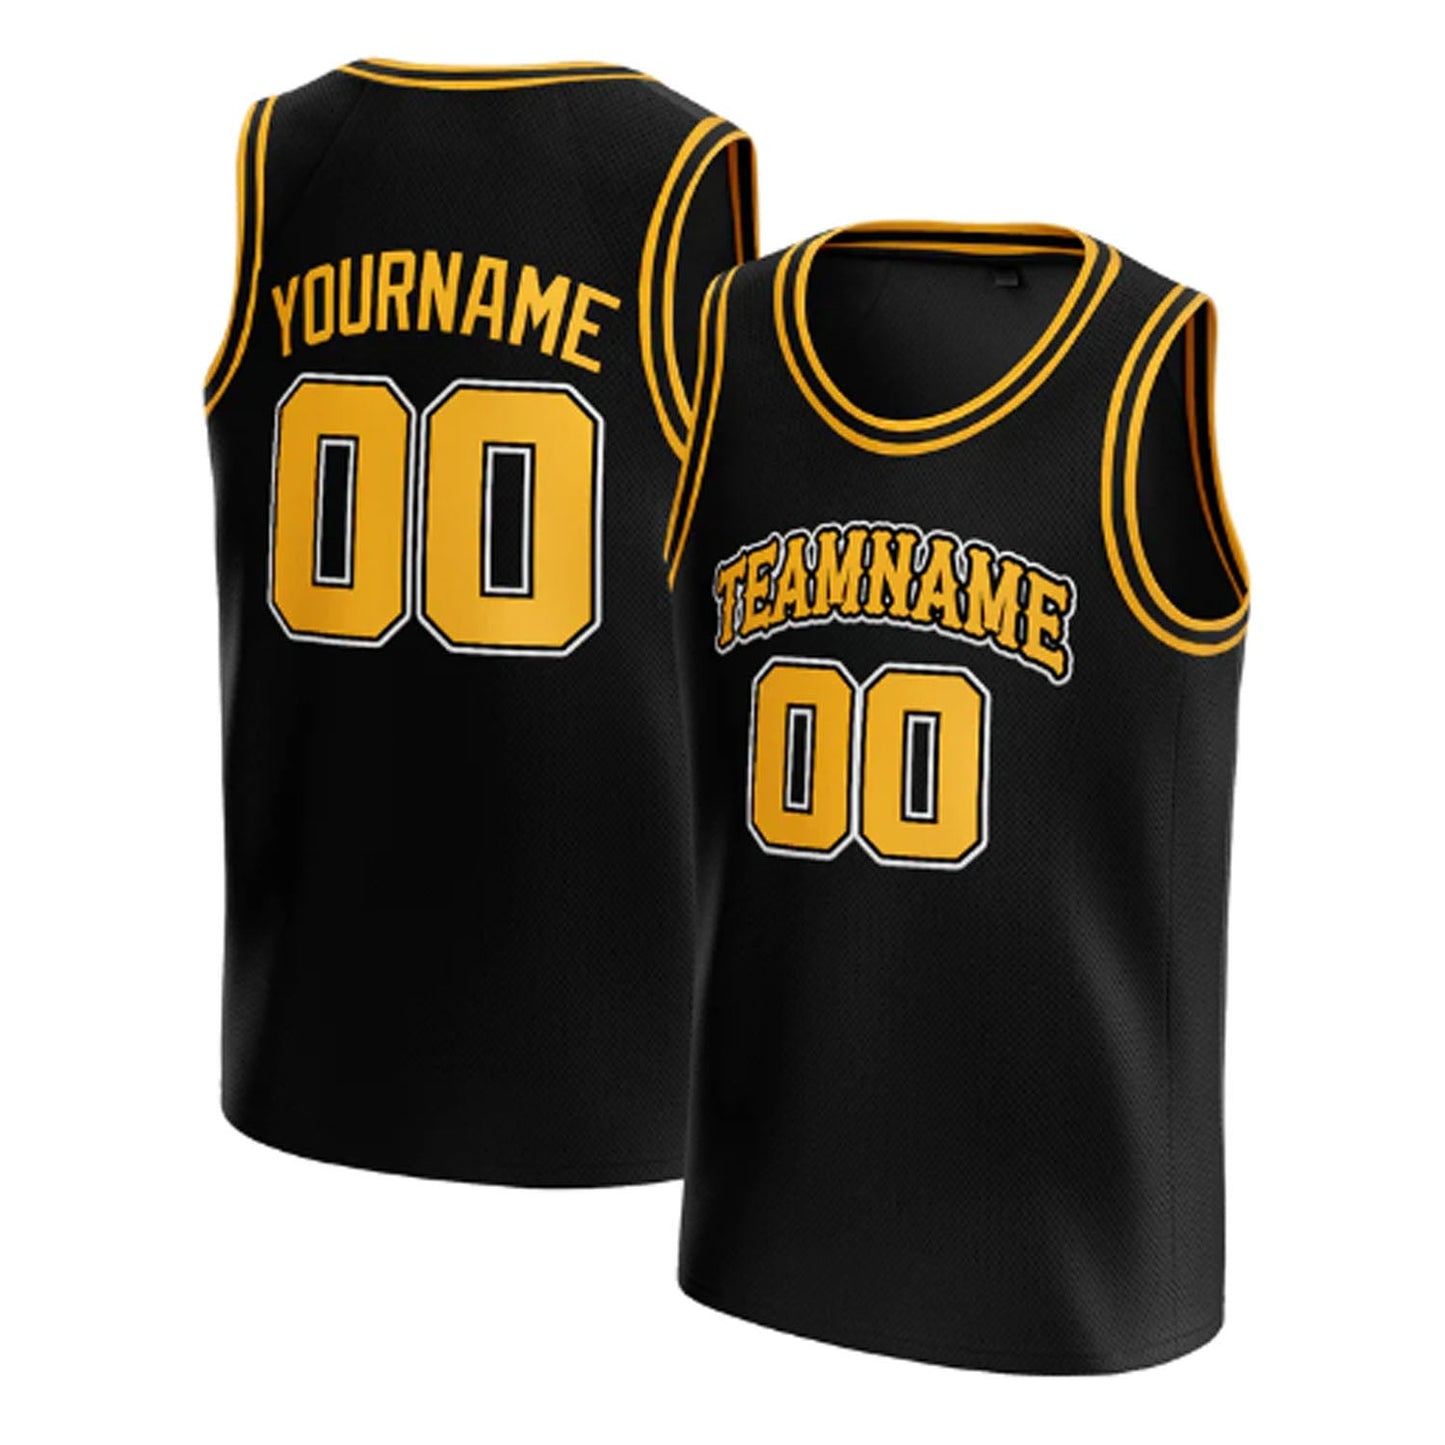 Black-Yellow Custom Basketball Jersey